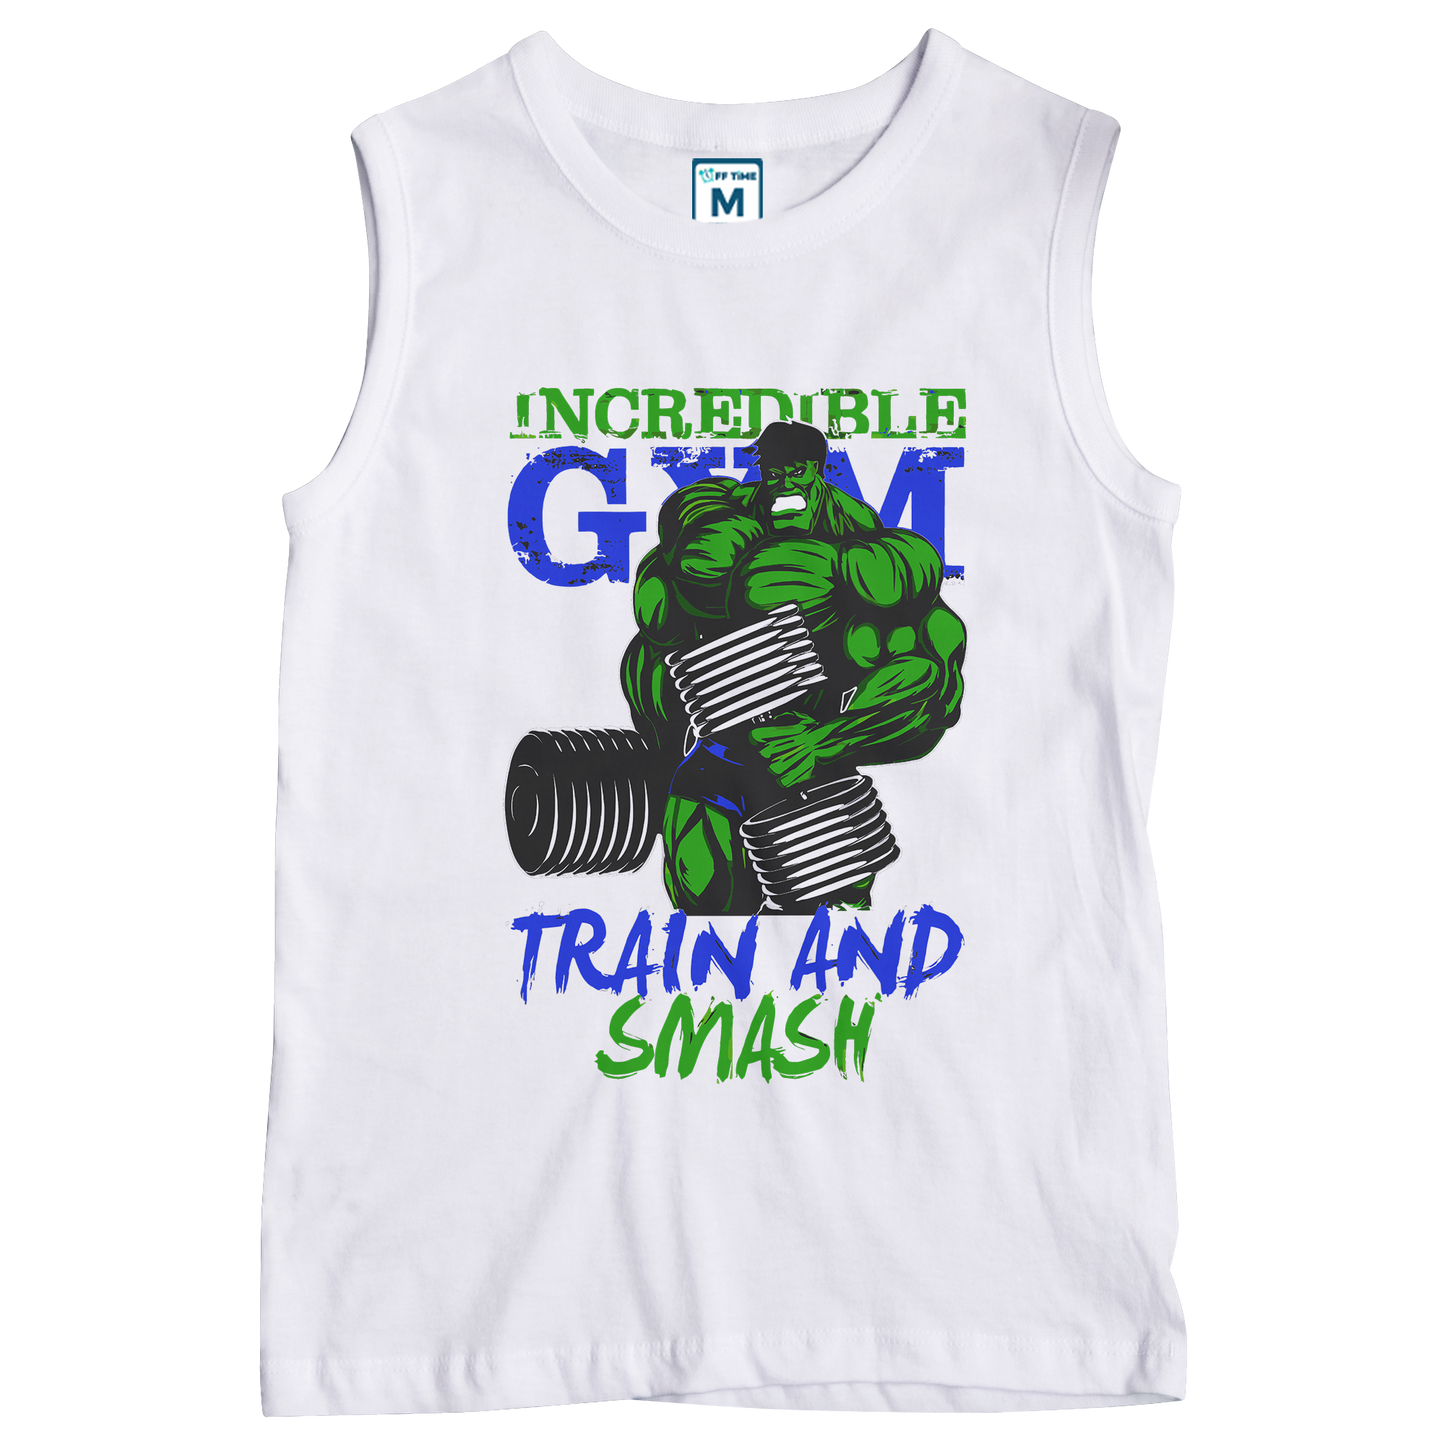 Sleeveless Drifit Shirt: Train and Smash